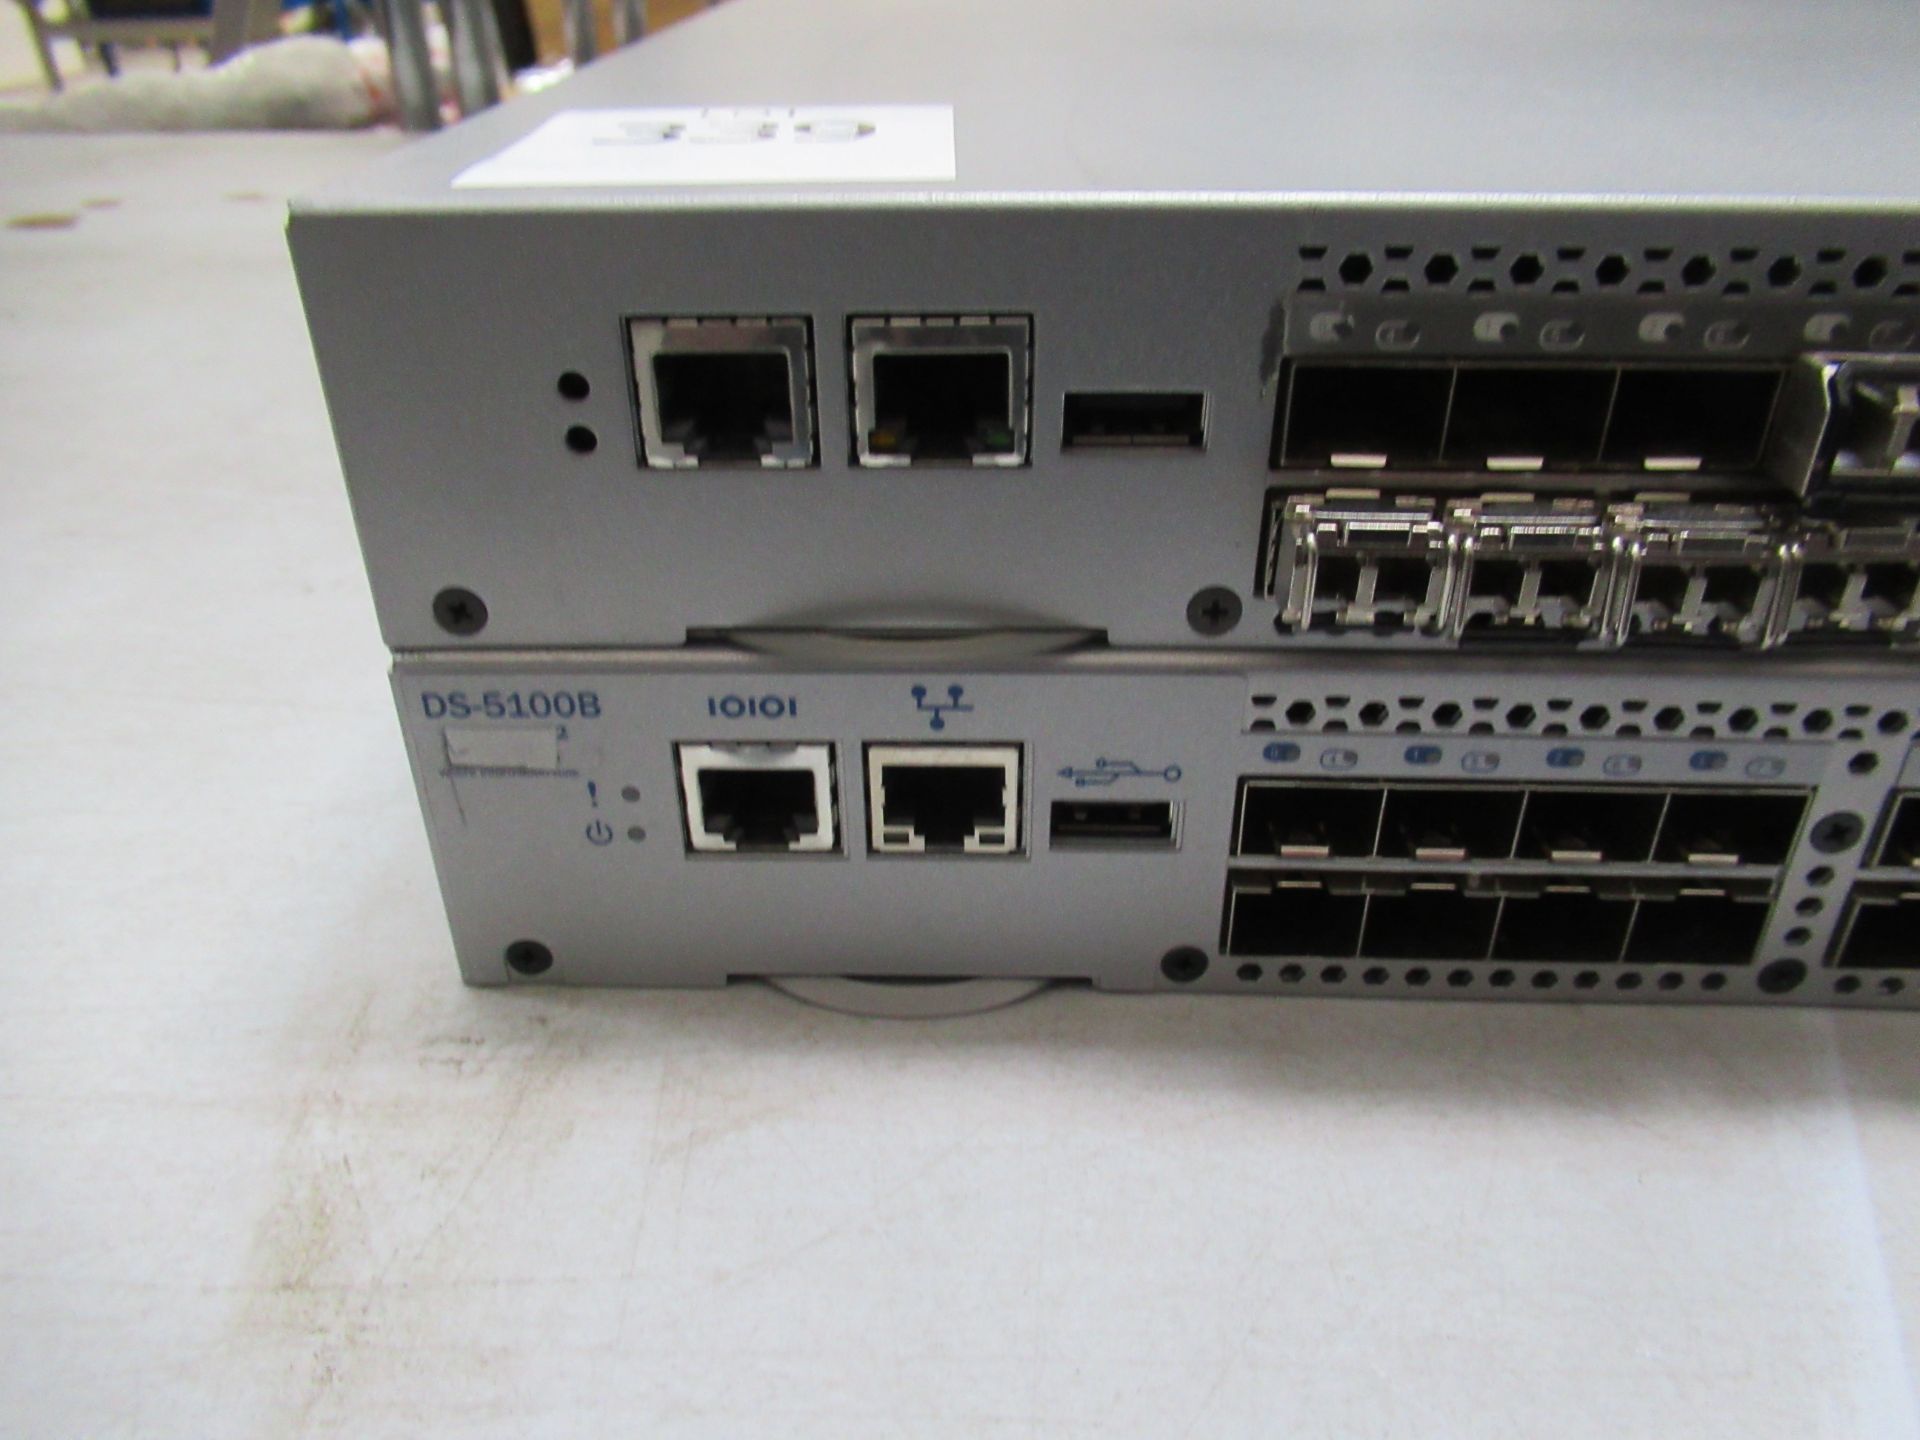 1 x HPE 24 Port SFP zl Module J8706A, ProCurve zl series and 1 x HPE HP 24-port Gig-T vl Module - Image 13 of 34